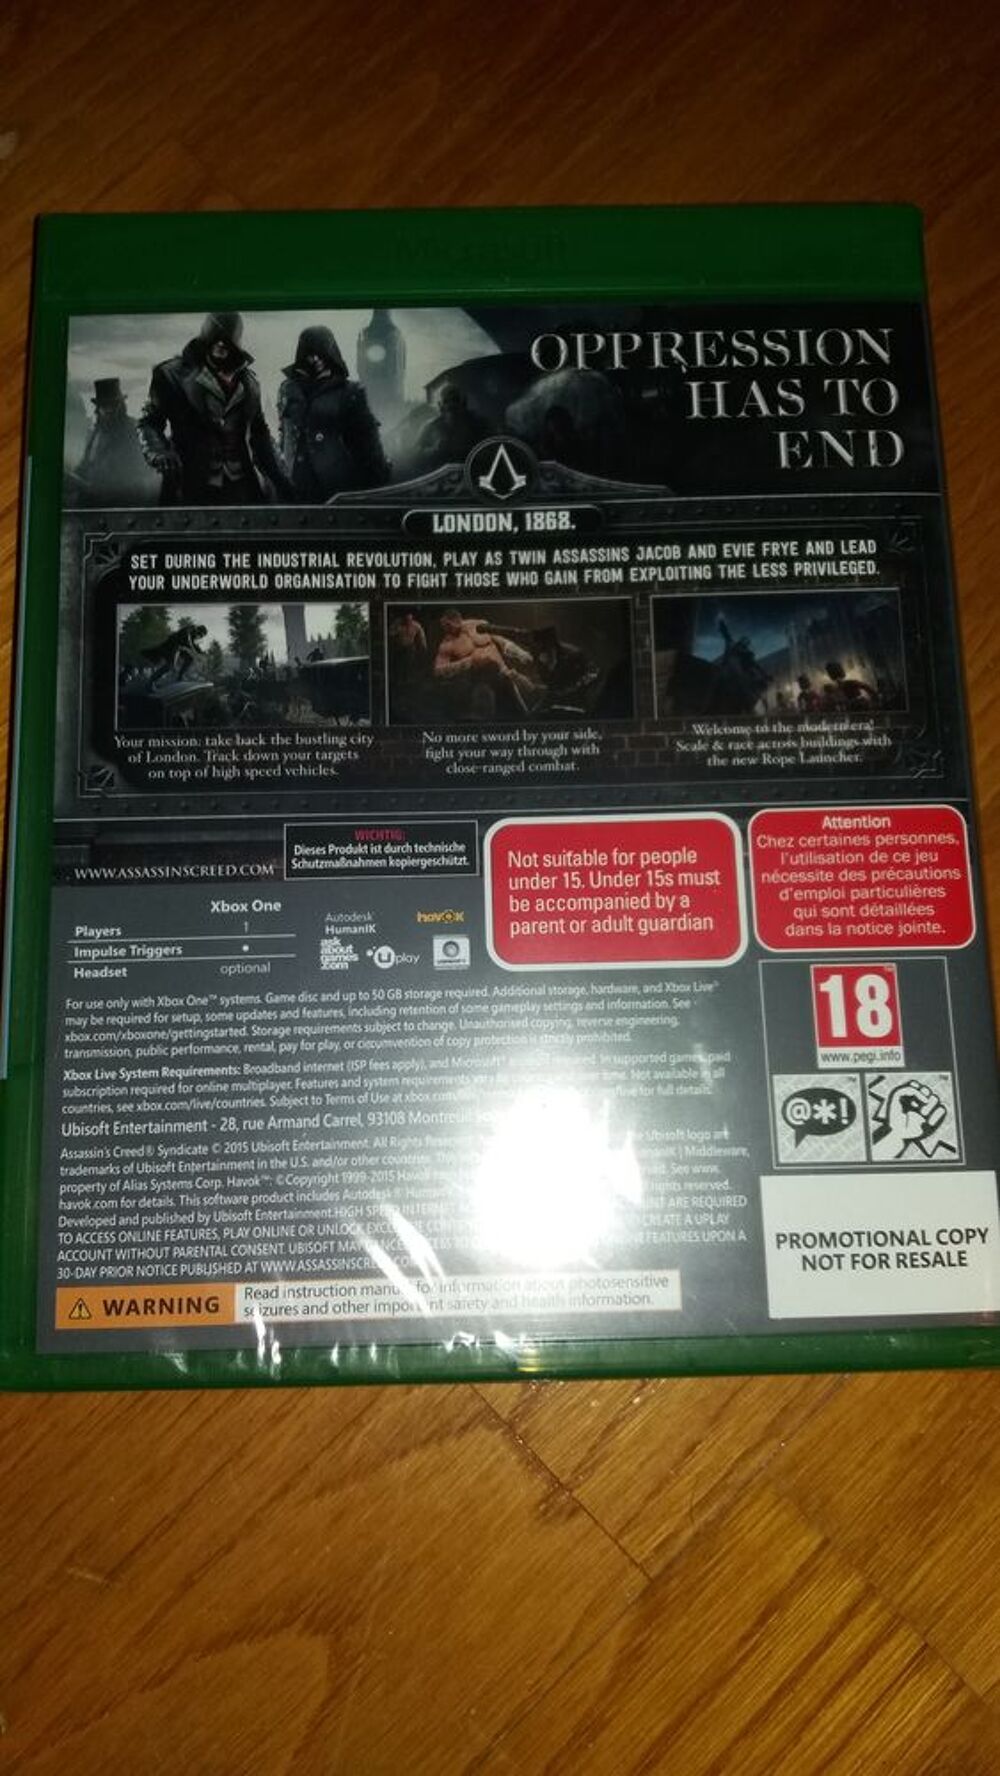 Jeux FarCry 5 et Assassin's Creed Syndicate XBOX ONE Neufs Consoles et jeux vidos